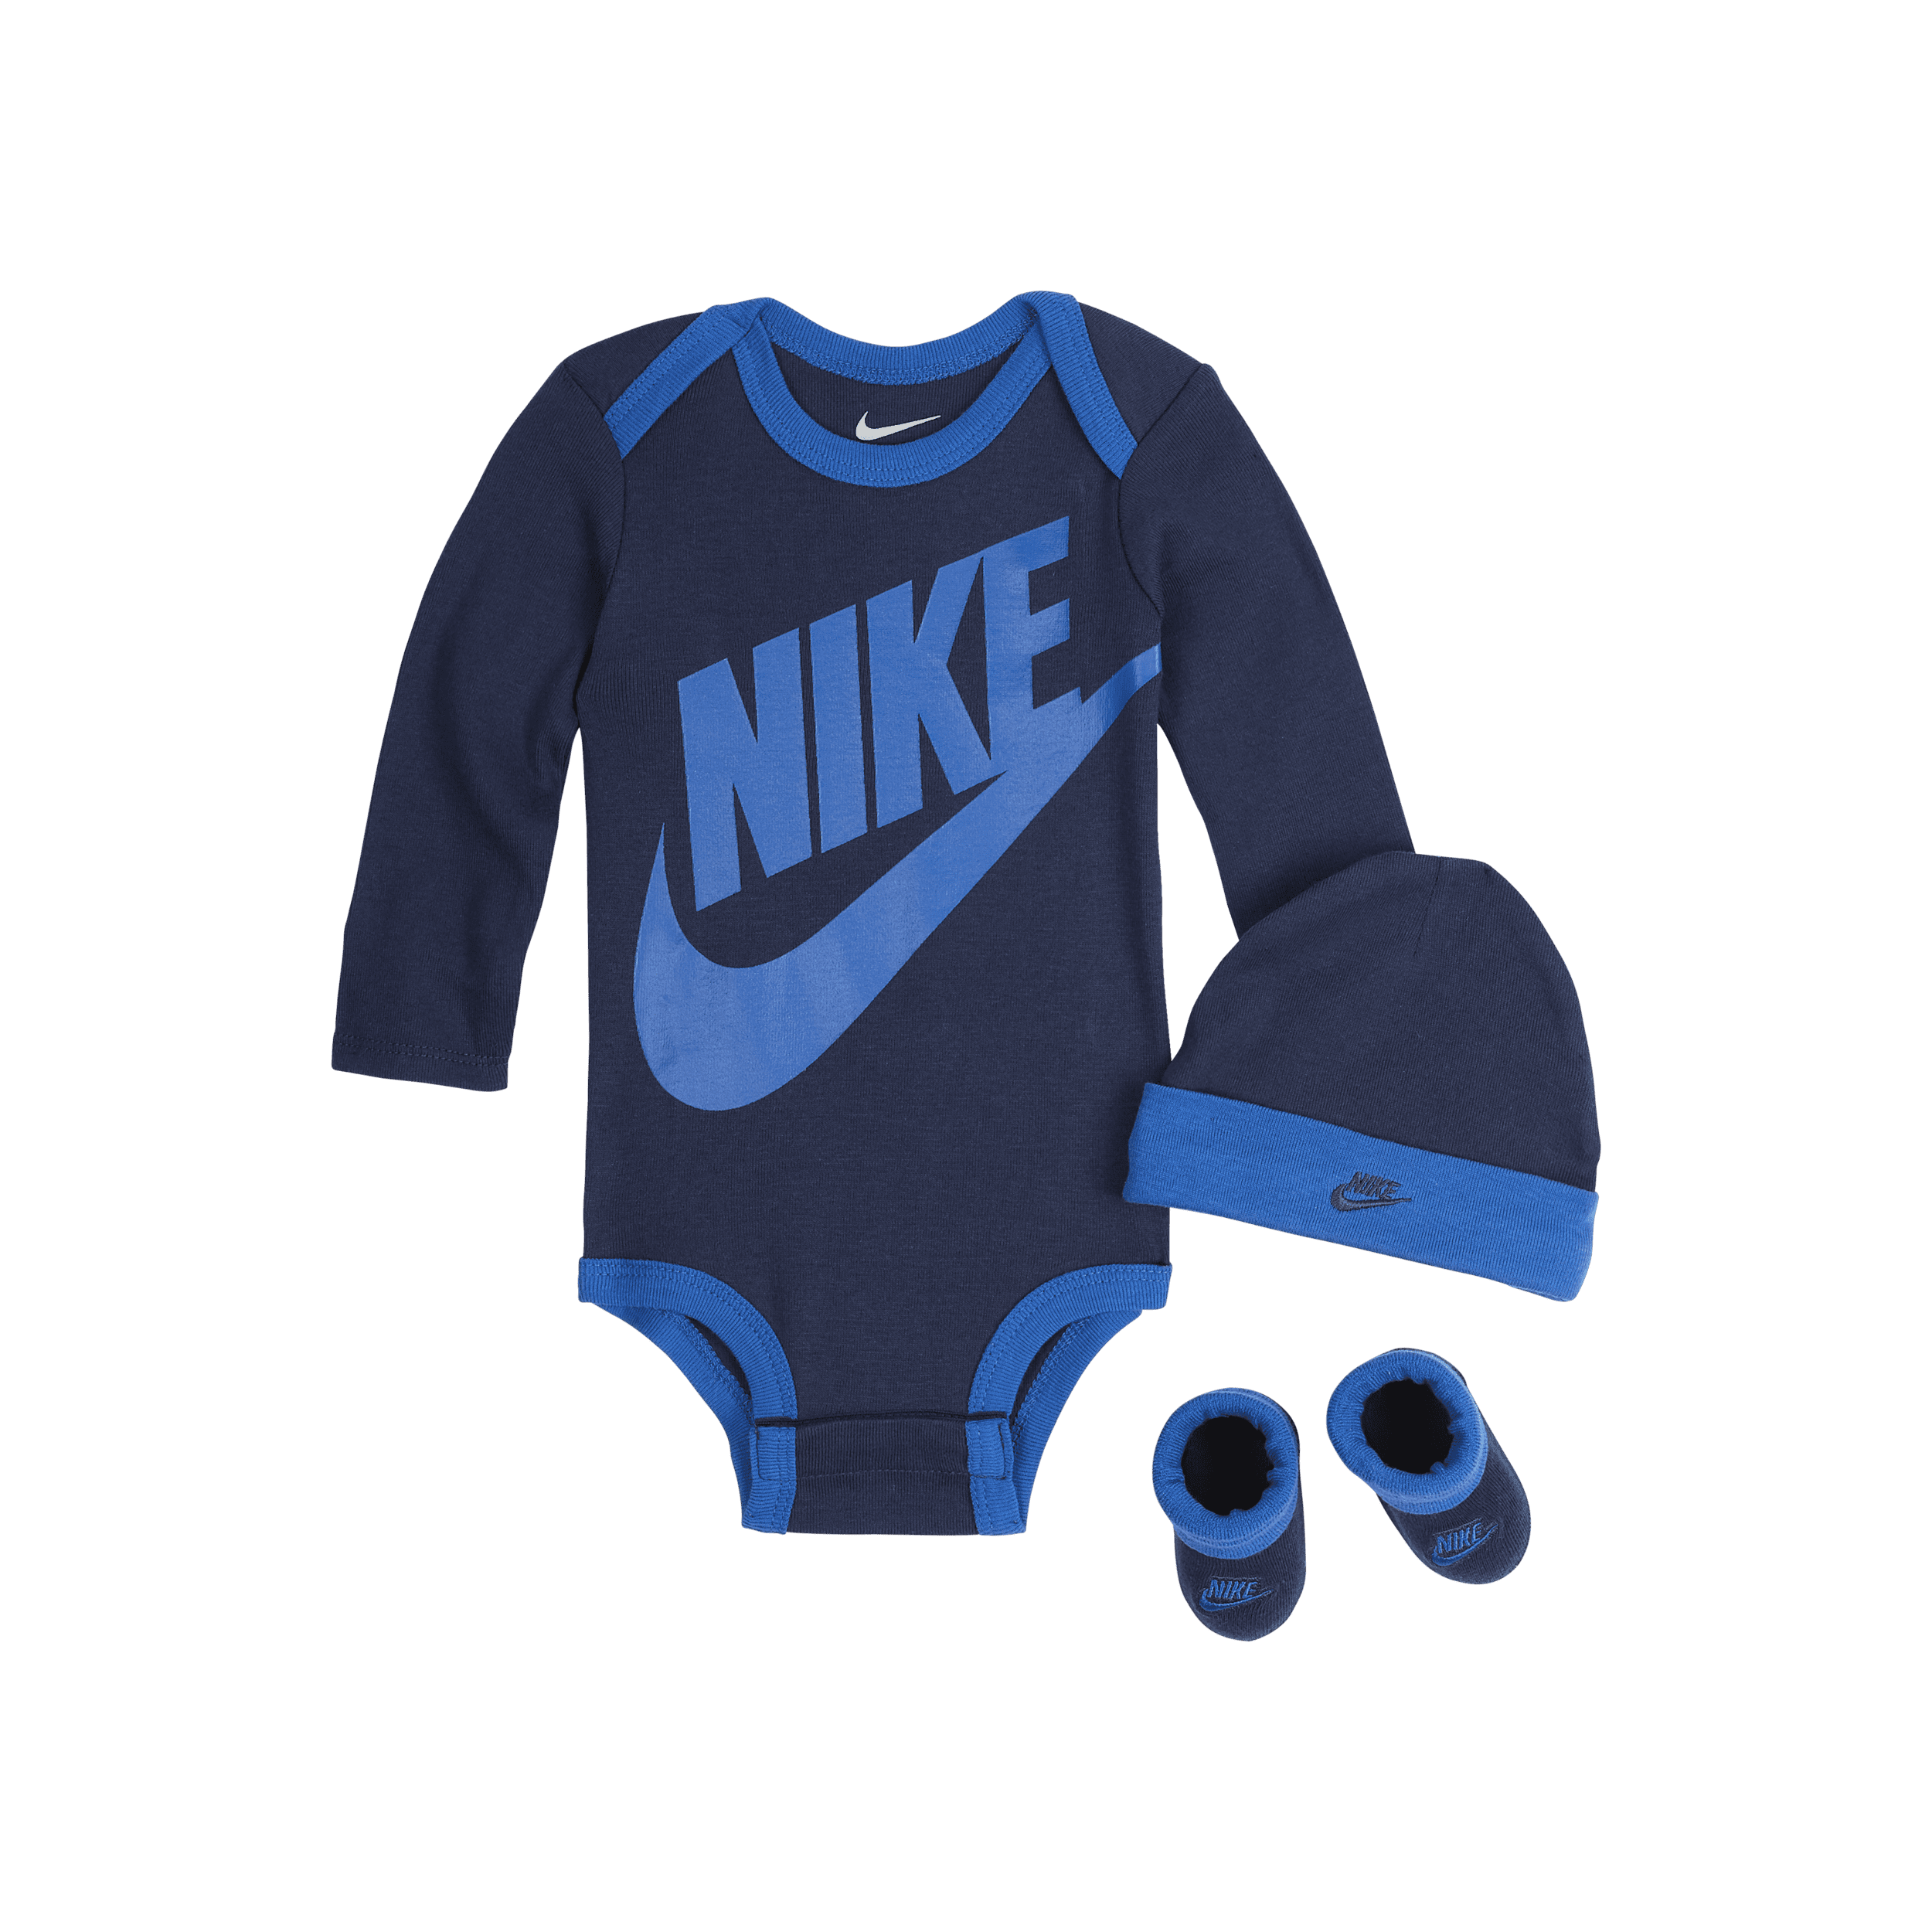 Completo in 3 pezzi Nike - Bebè (0-6 mesi) - Blu